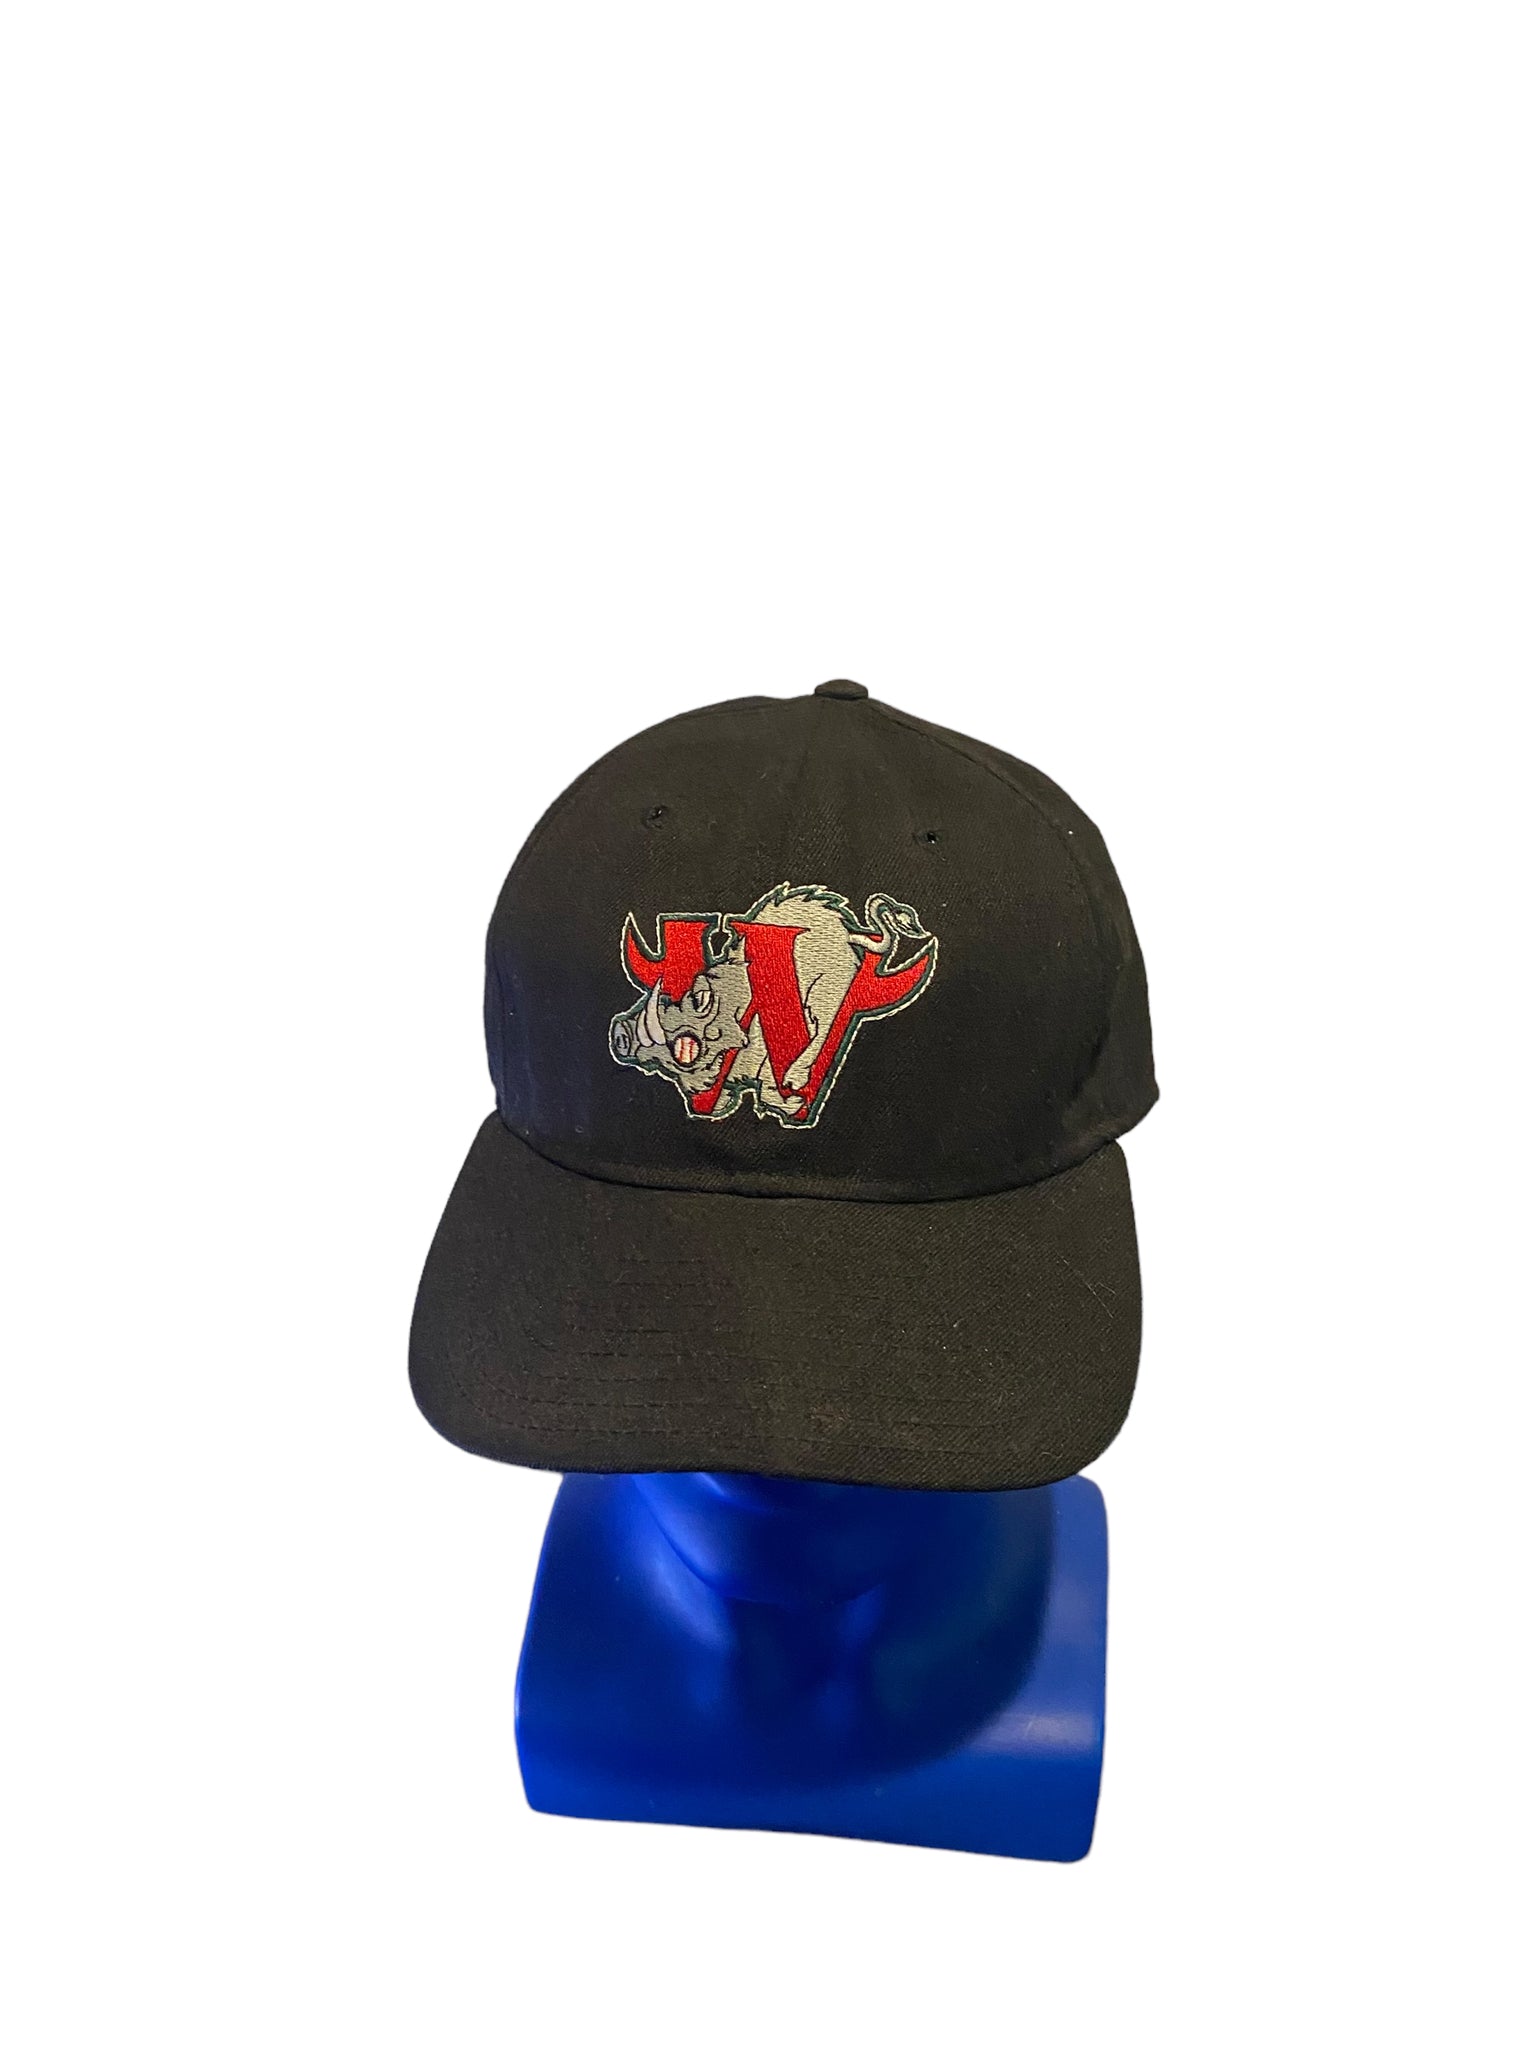 Vtg Winston Salem Warthogs Hat New Era Pro Model USA MiLB Baseball Snap Back Cap